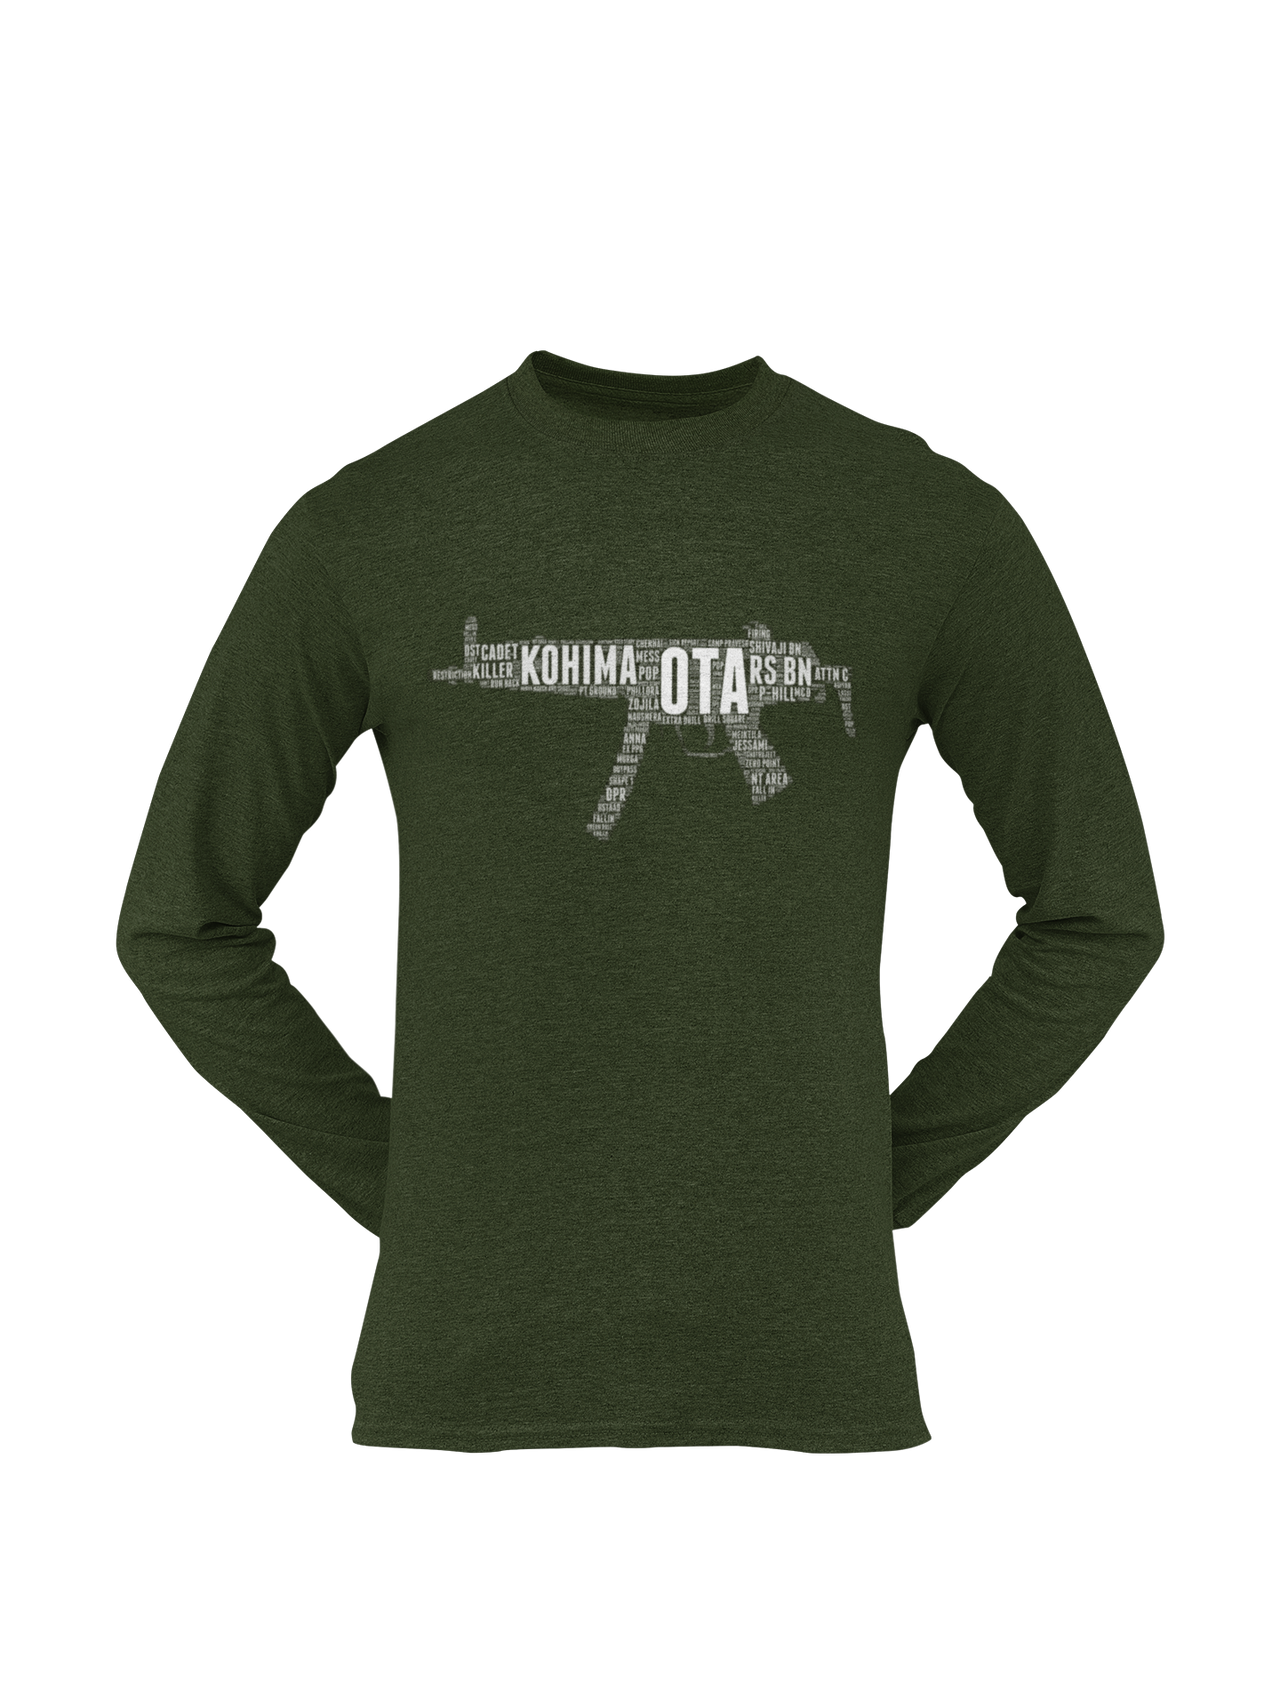 OTA T-shirt - Word Cloud Kohima - MP5 (Men)